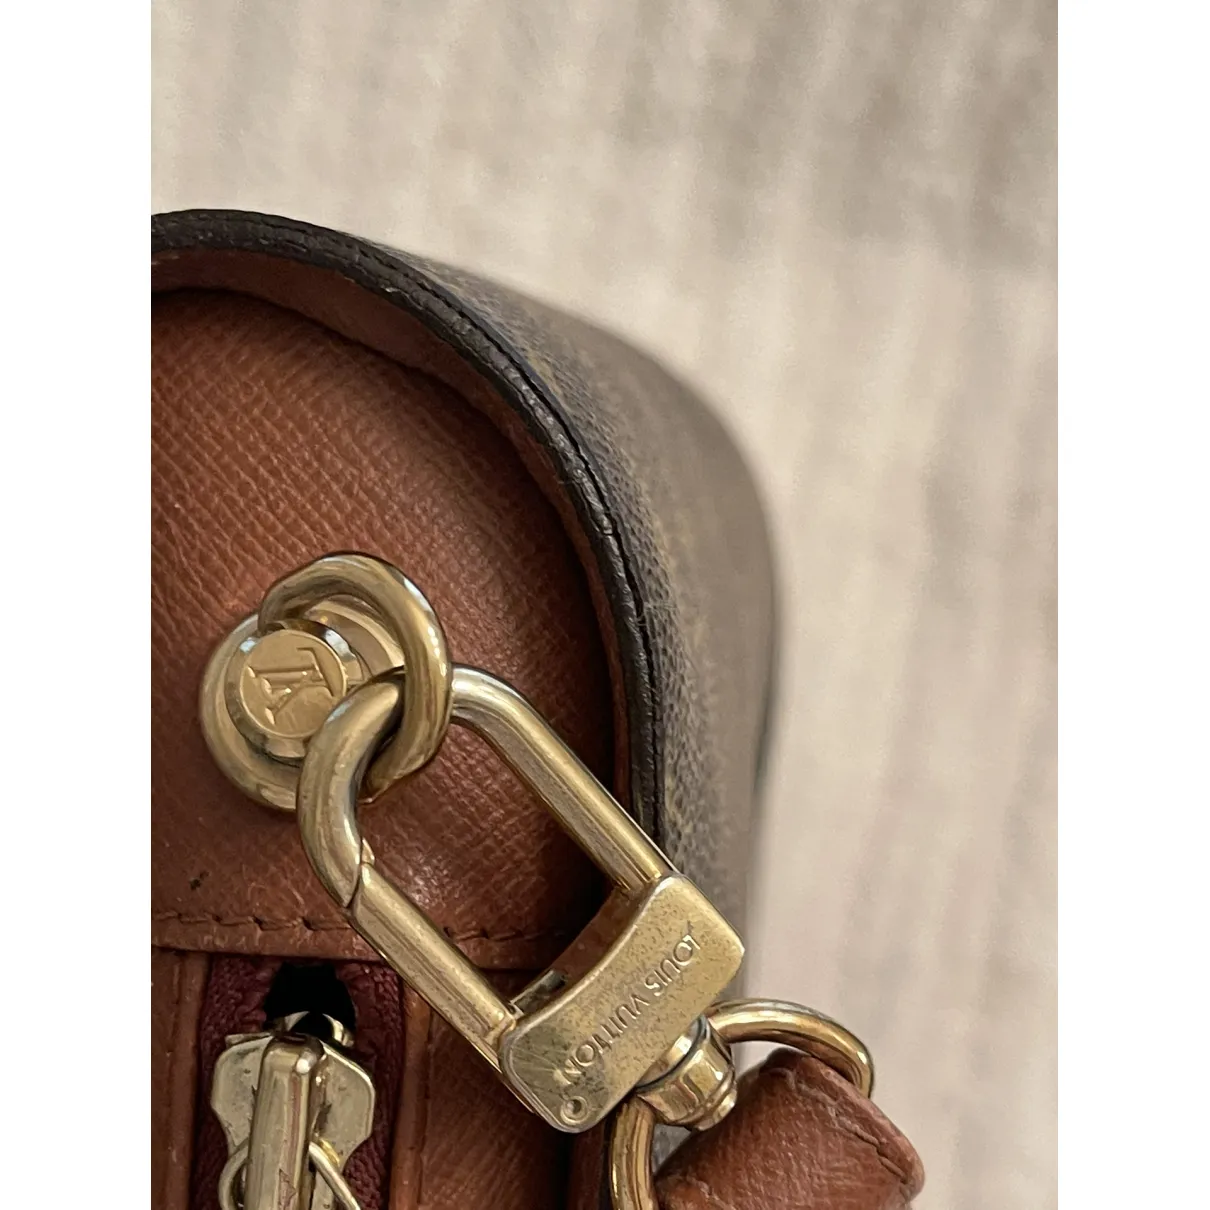 Louis Vuitton bag review, Orsay clutch / pouch #bagreview #lv